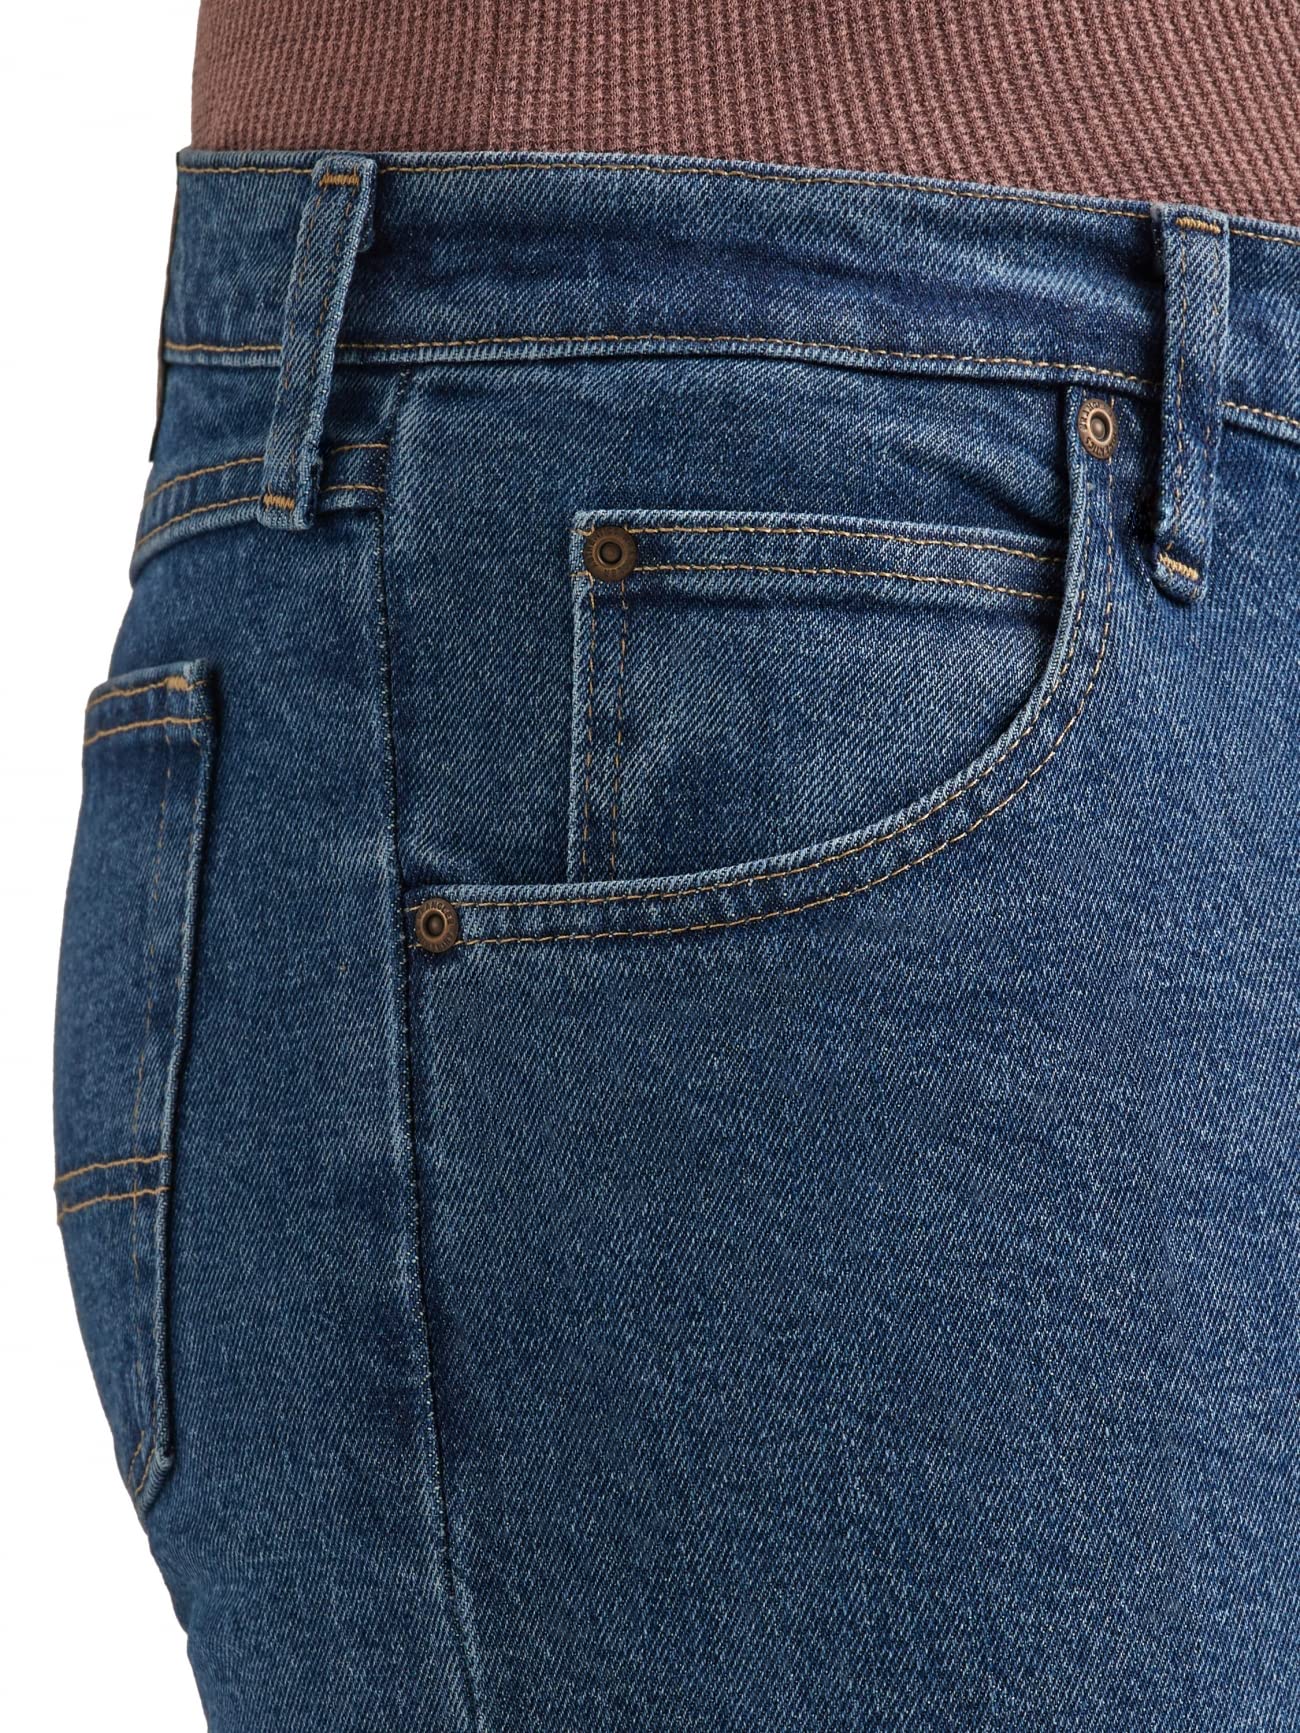 Wrangler Authentics Men's Classic 5-Pocket Regular Fit Jean, Dark Stonewash Flex, 33W X 32L